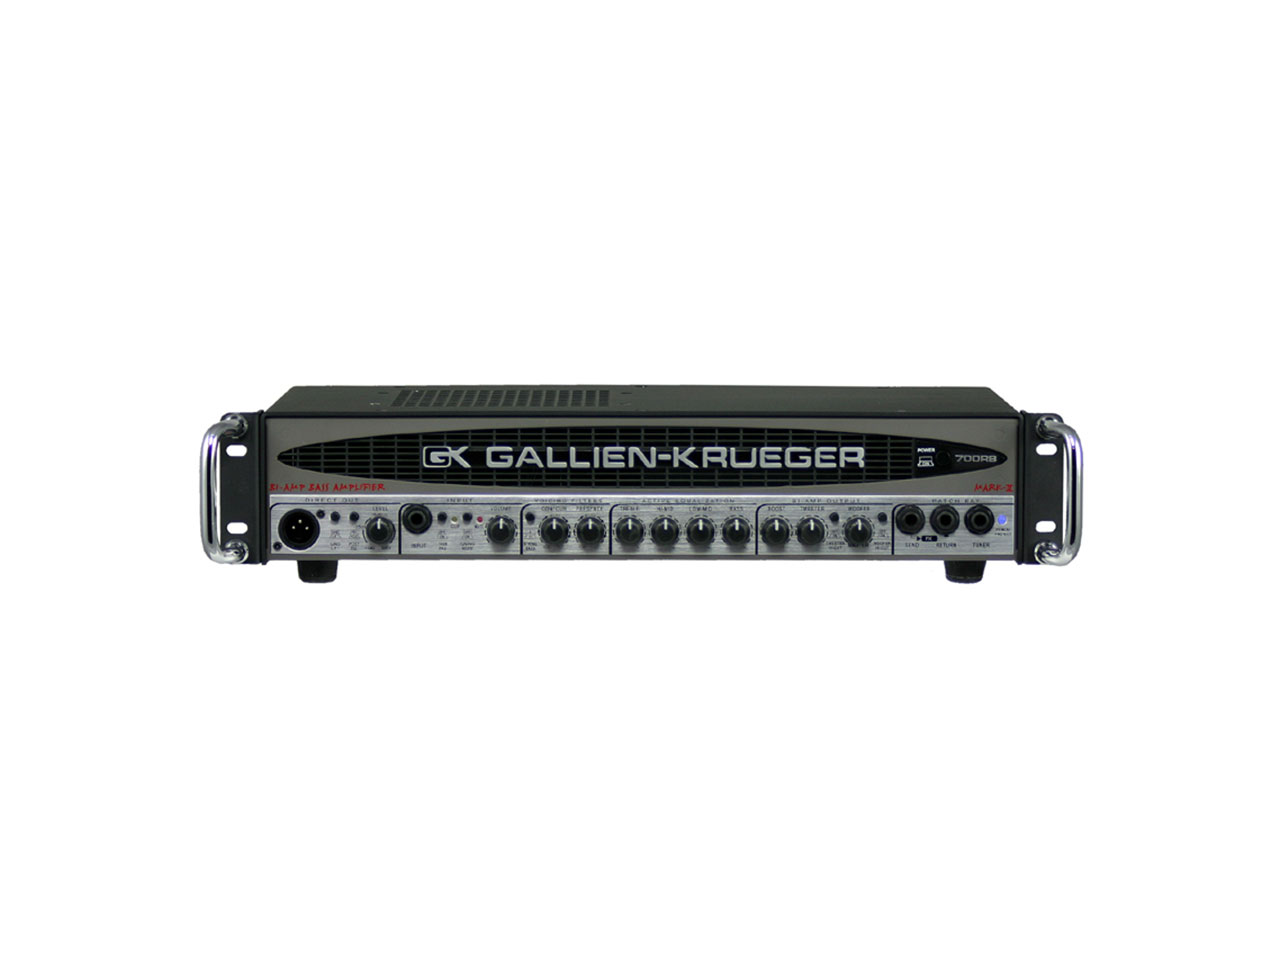 GALLIEN-KRUEGER(ギャリエンクルーガー) 700RB II (ヘッドアンプ)